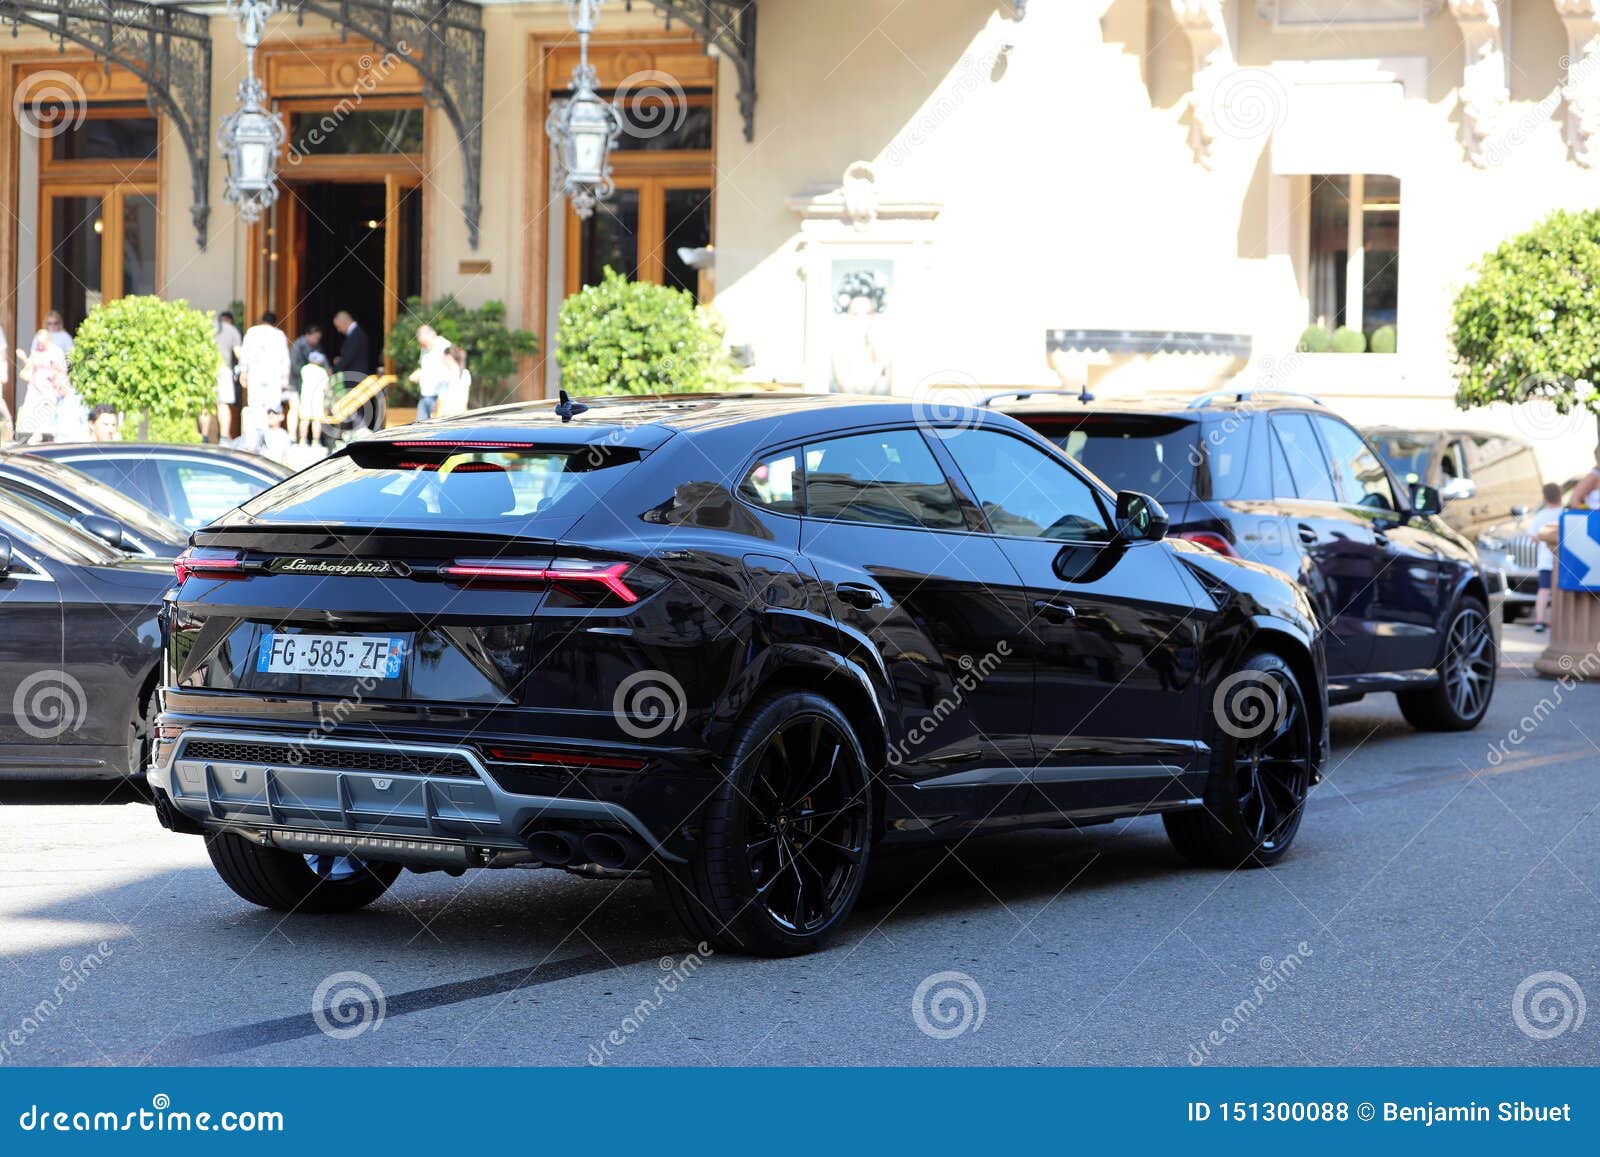 Black Lamborghini Urus SUV - Rear View Editorial Stock ...